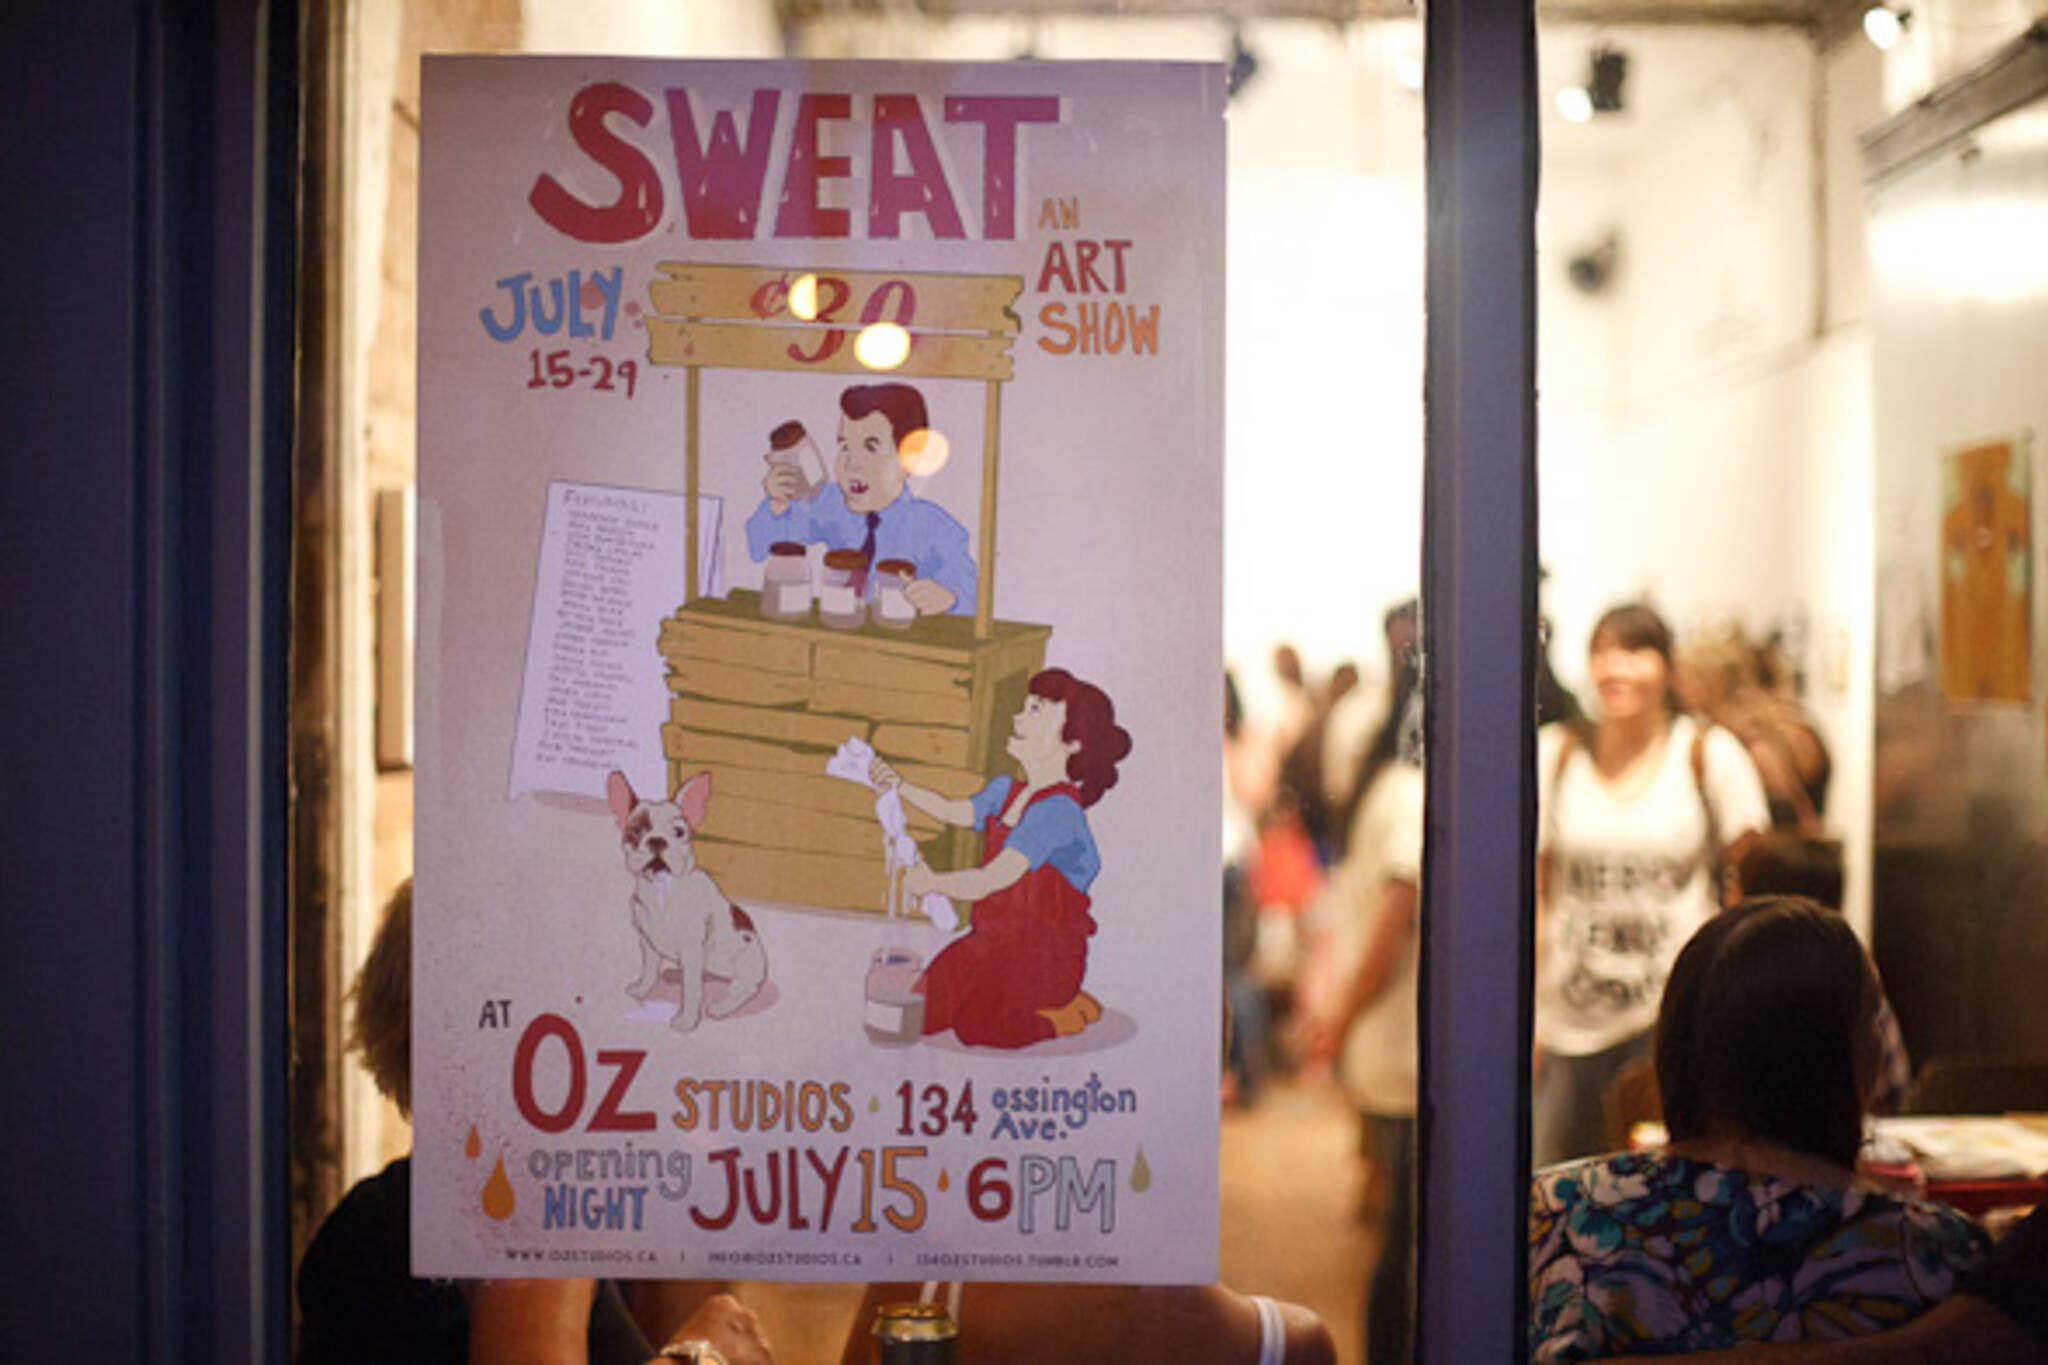 Sweat Art Show